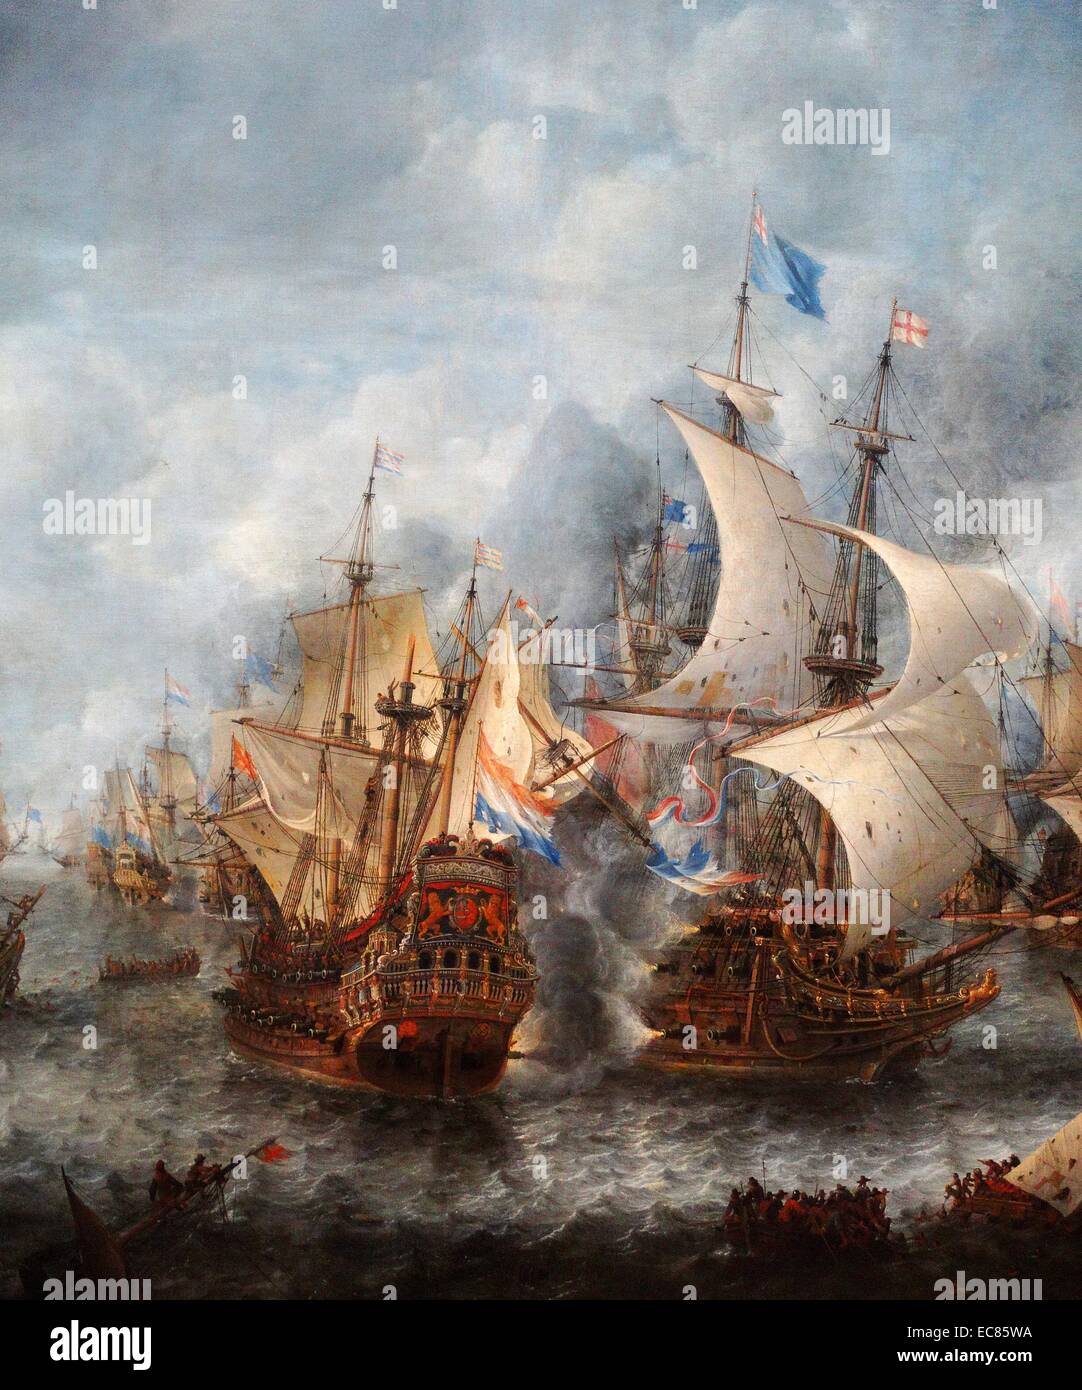 14 December 1814-20"x32" Naval Art on Canvas Battle of Lake Borgne